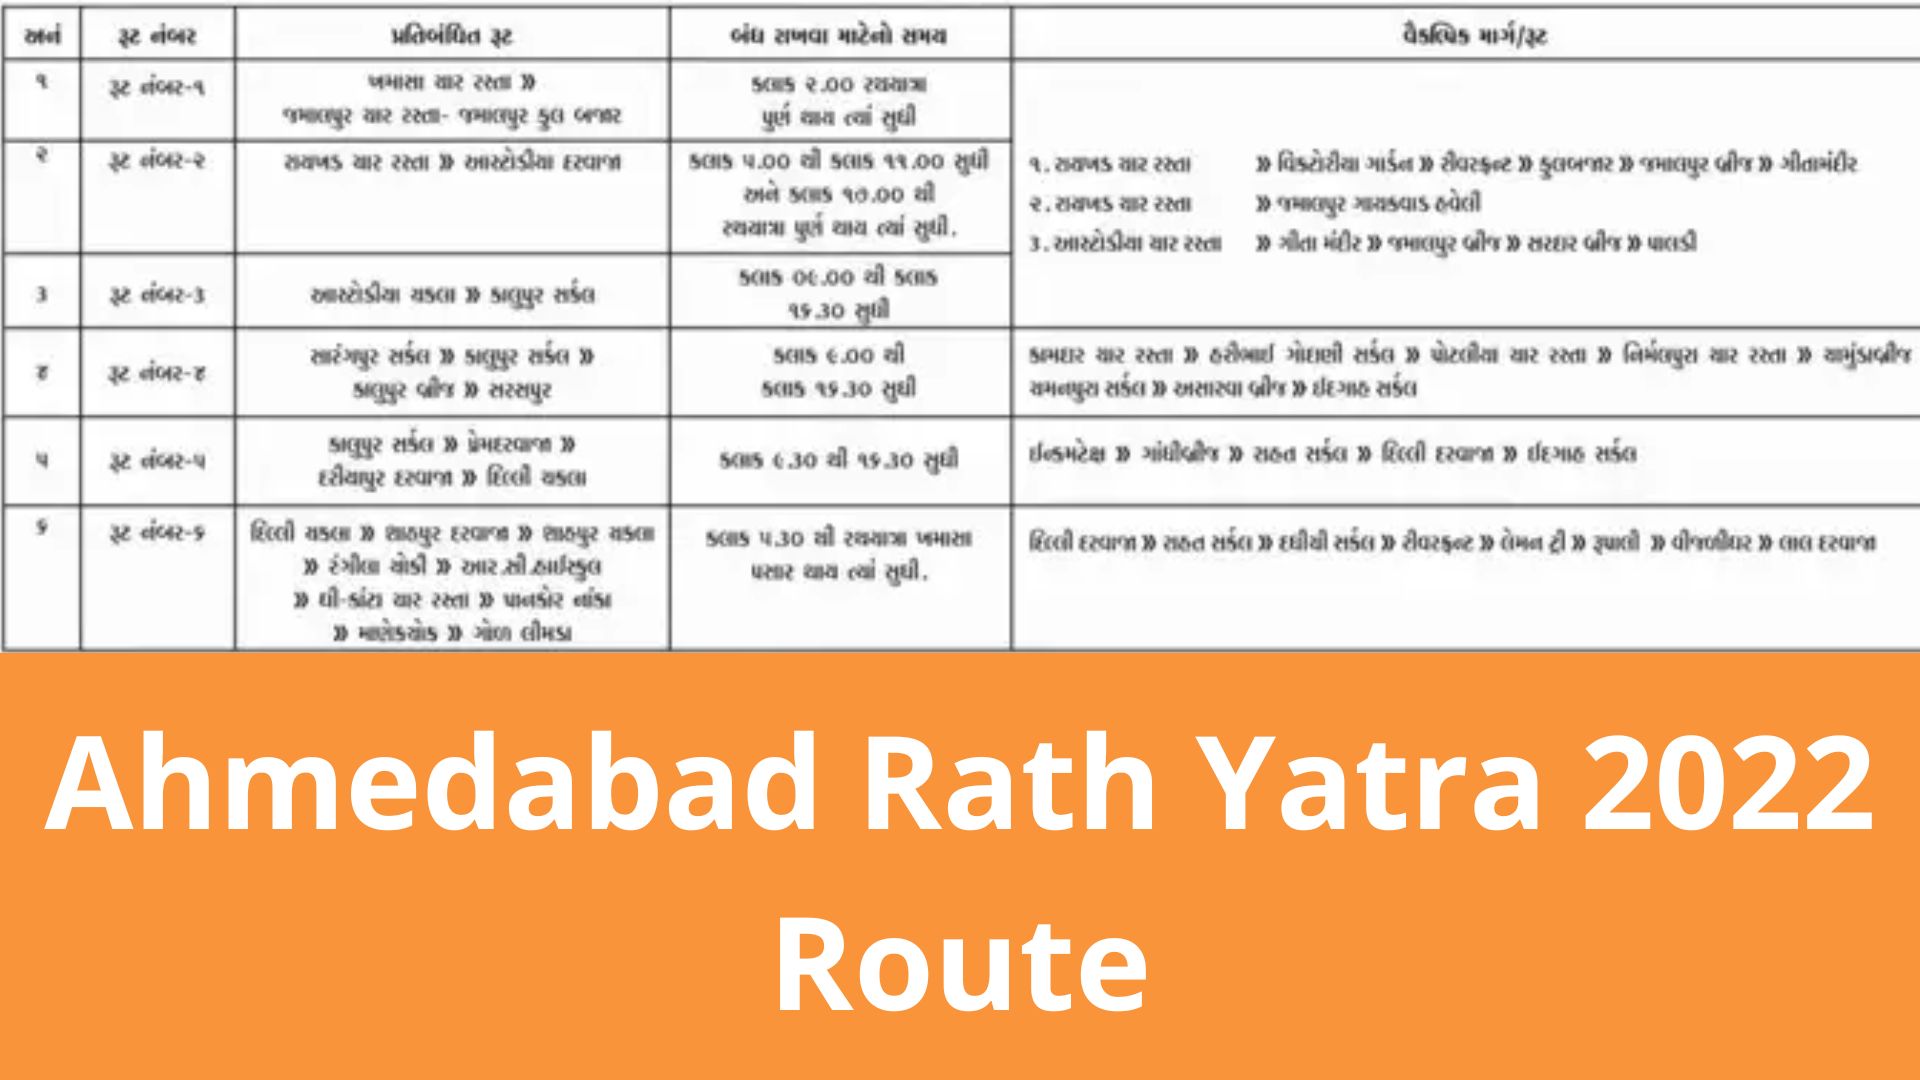 Ahmedabad Rath Yatra 2022 Route